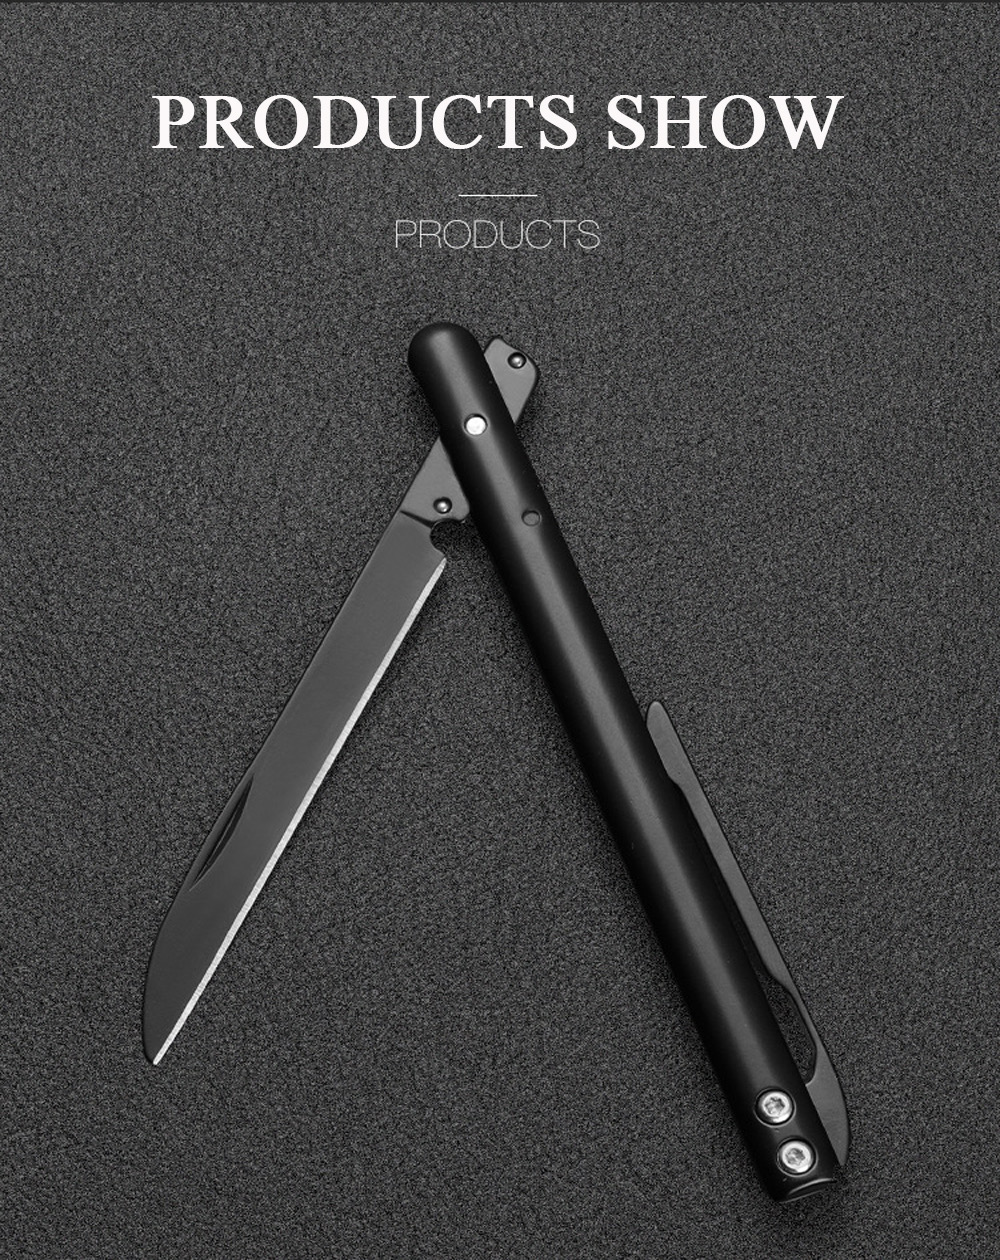 !!New product - มีดพับทรงปากกา ขนาดเล็ก มีดพับ EDC มีสีดำ สีเงิน